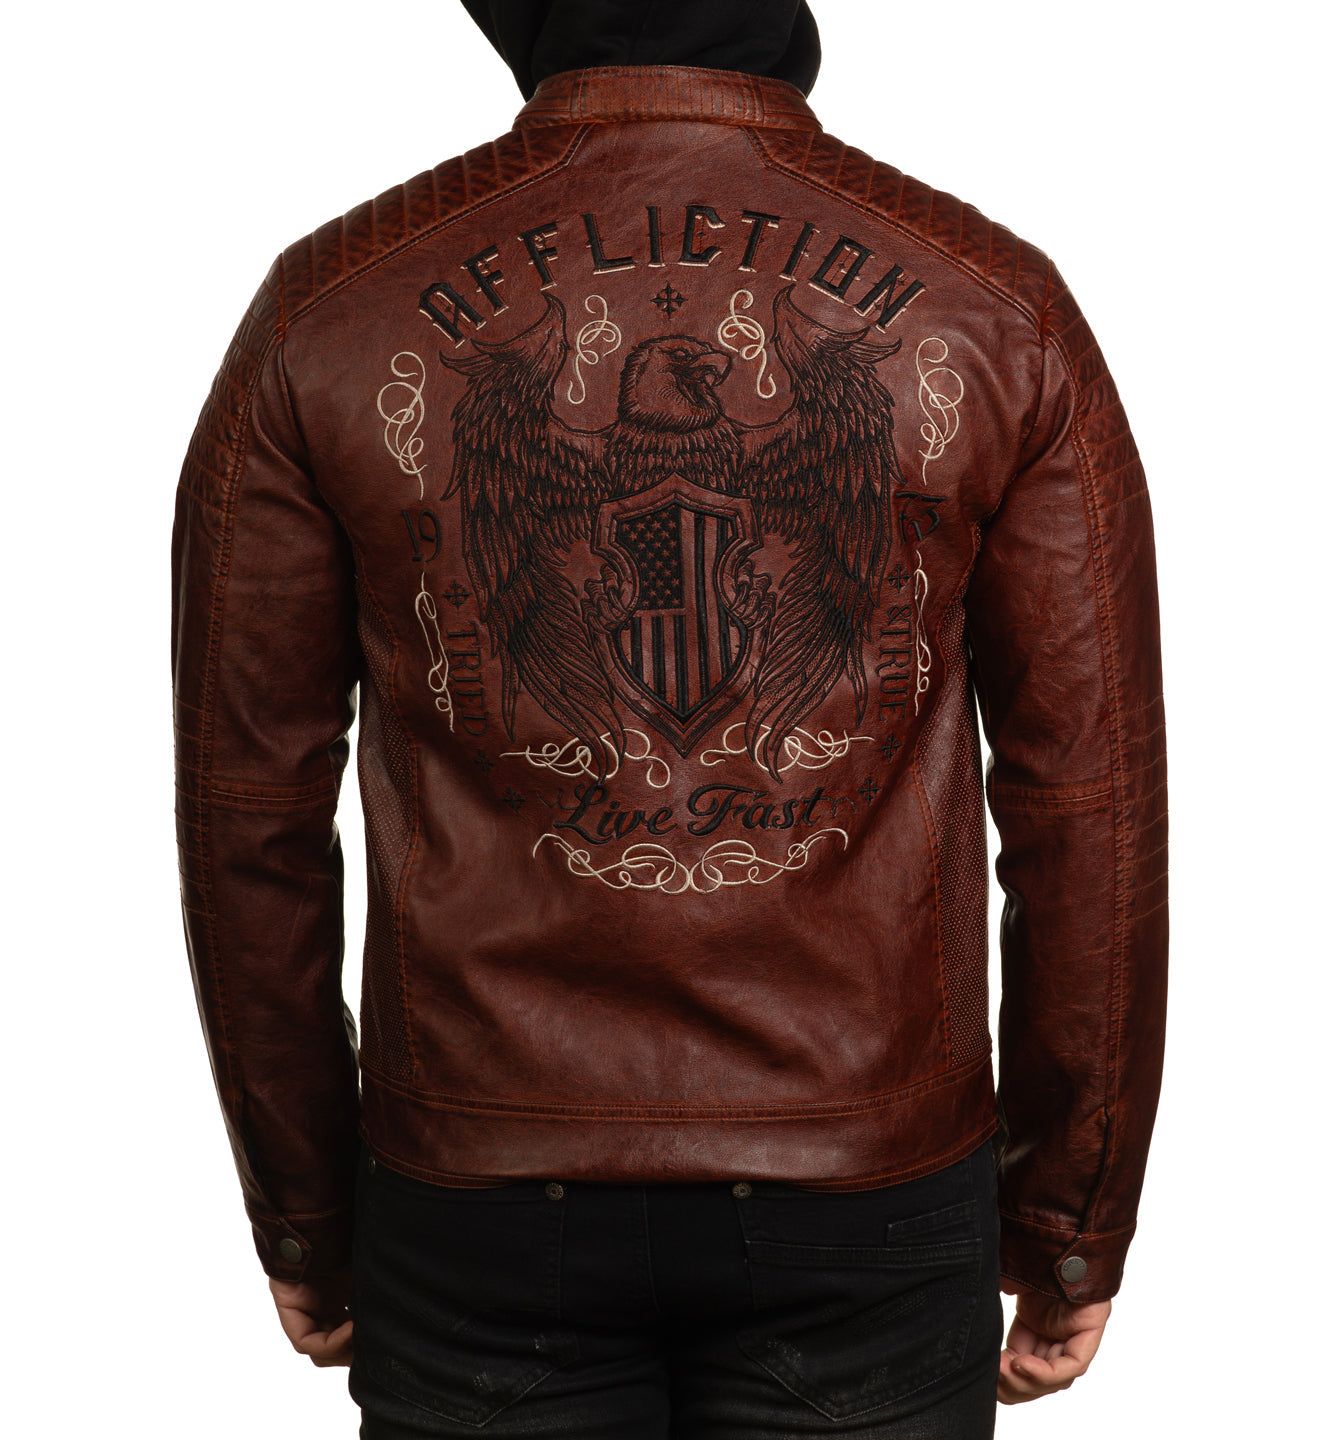 Code Of Honor Jacket - Affliction Clothing